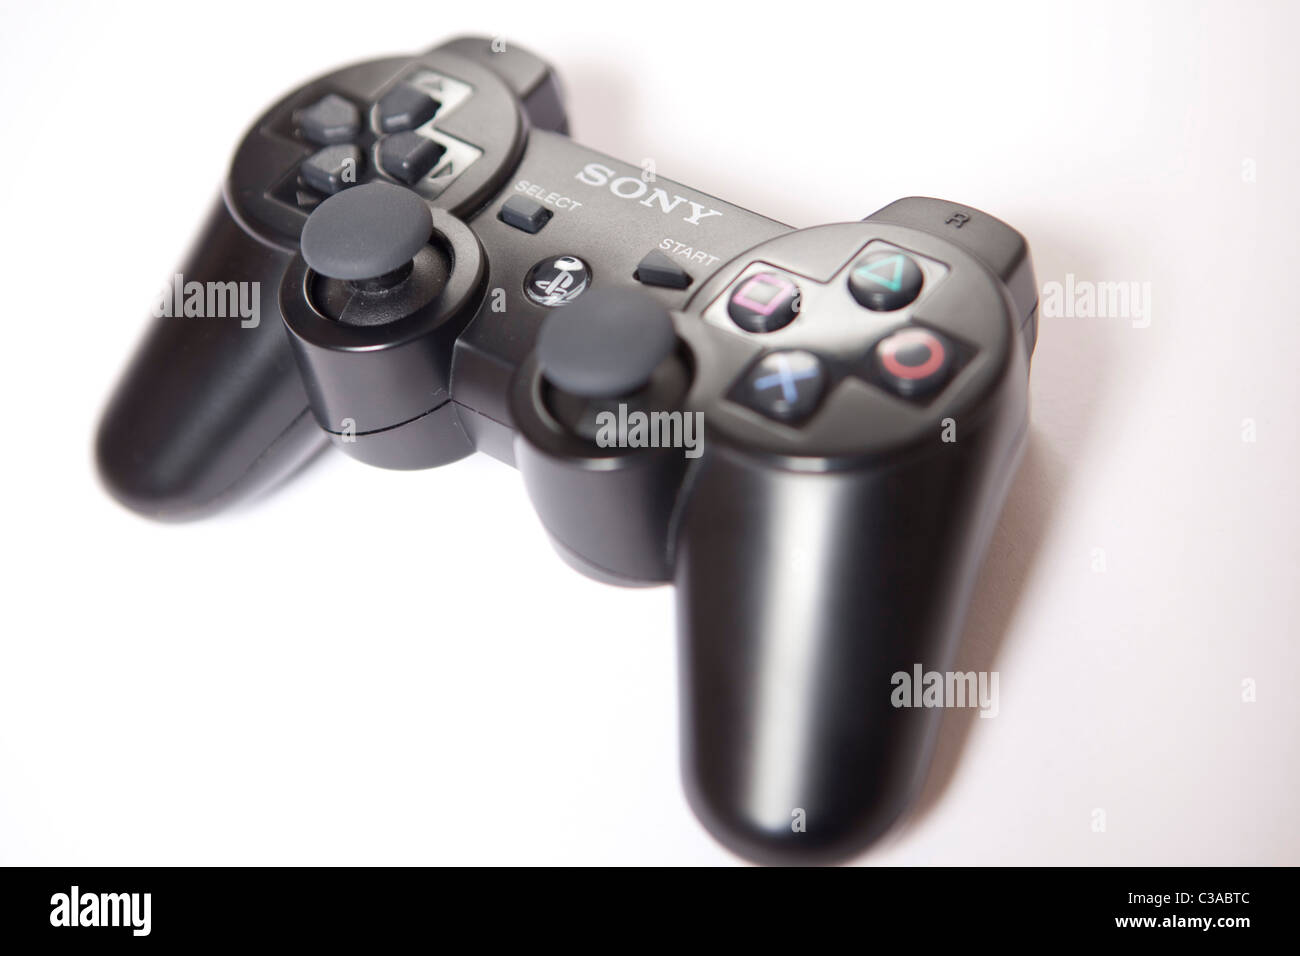 Illustraitve image of the Sony Playstation 3 controller. Stock Photo